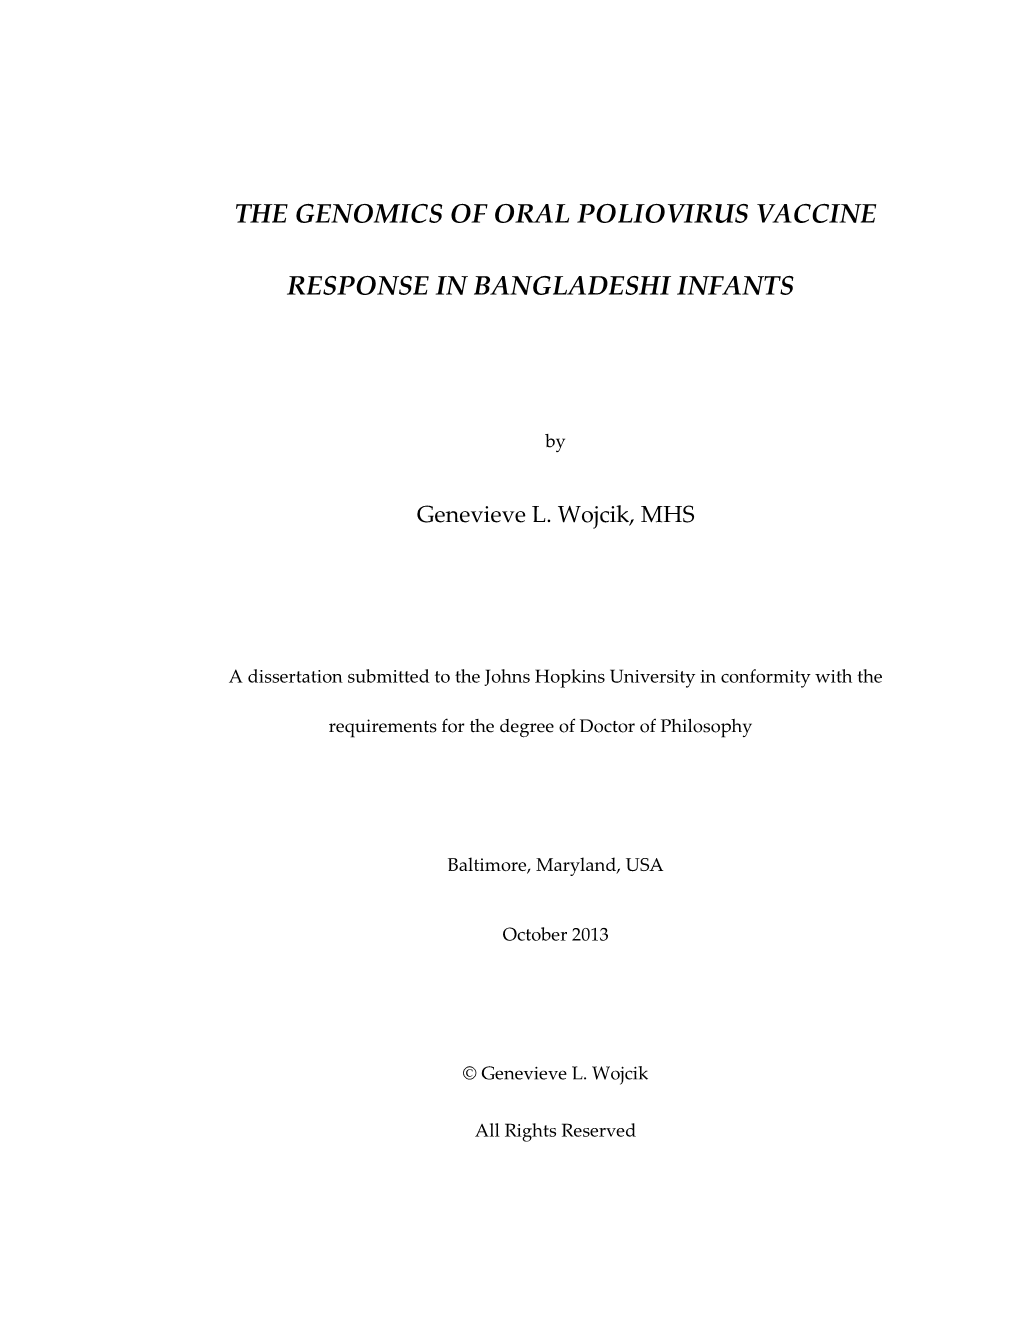 The Genomics of Oral Poliovirus Vaccine